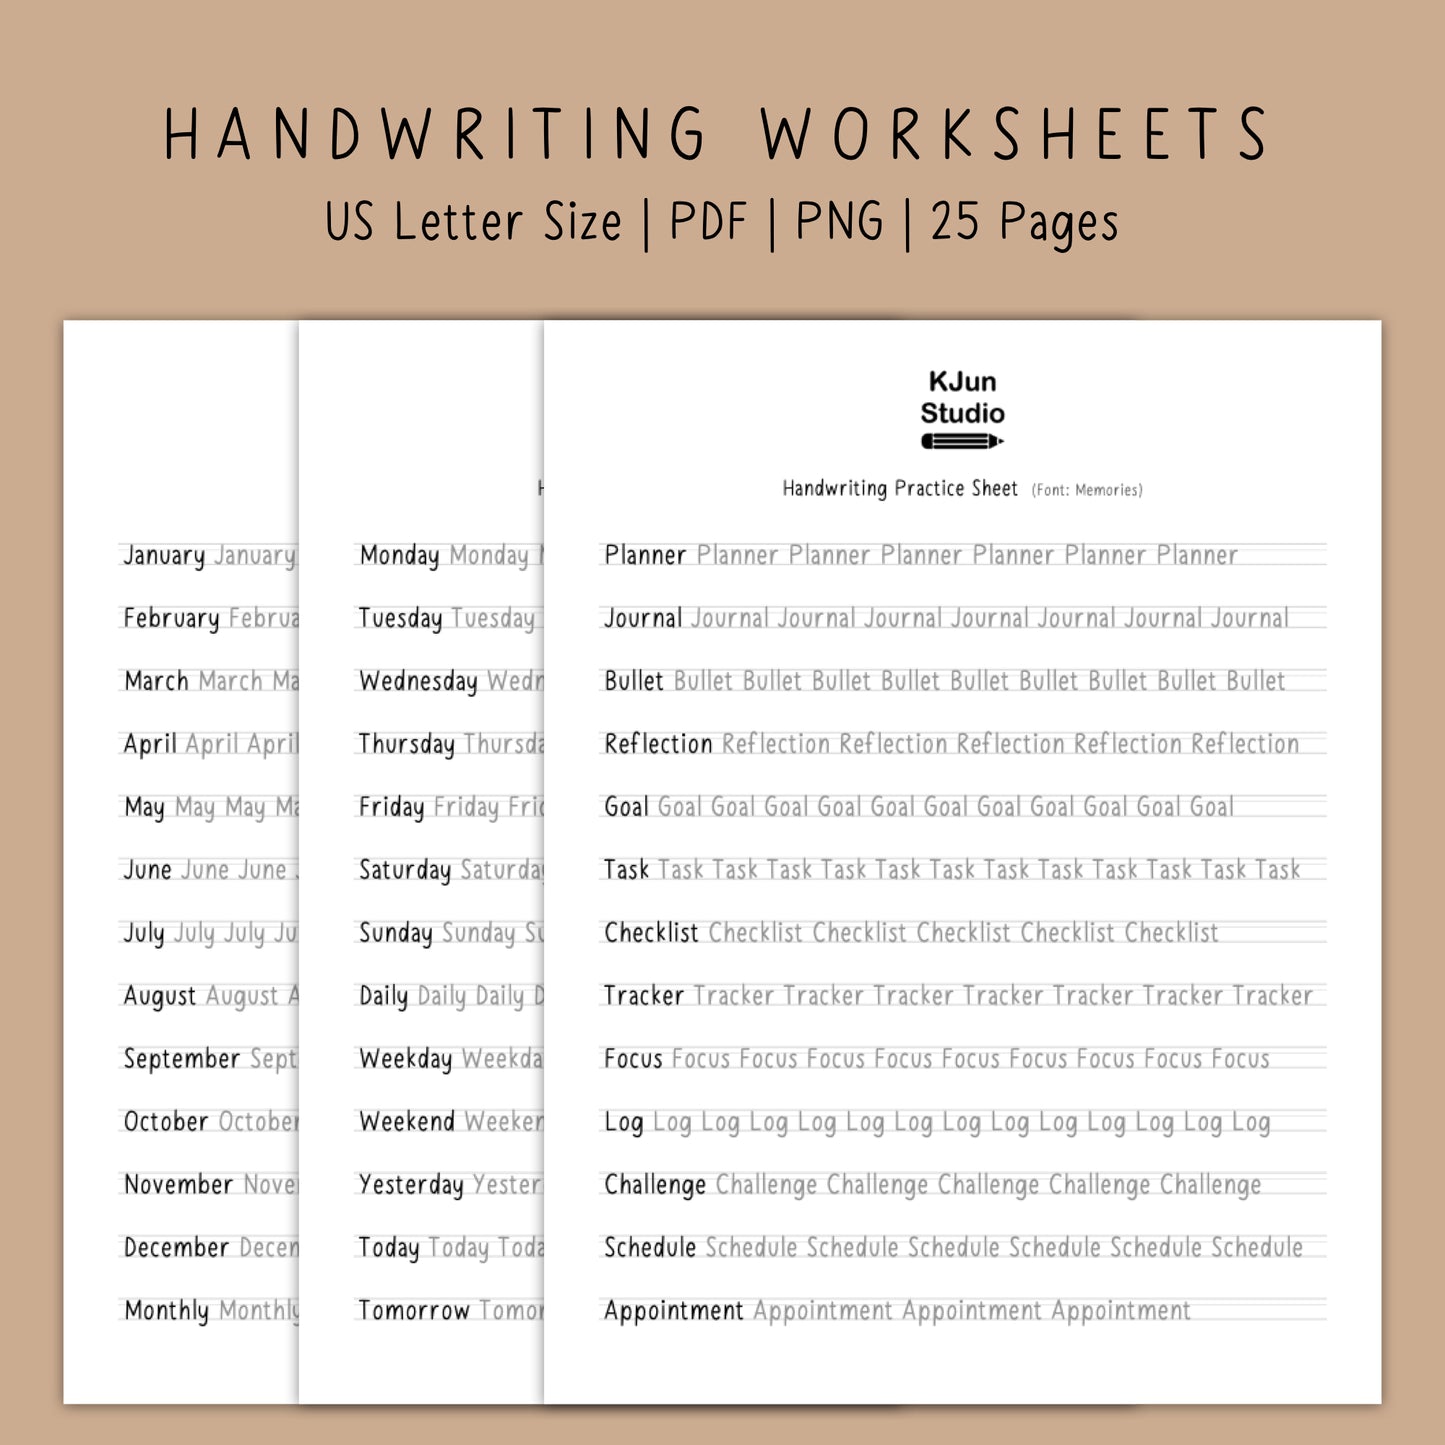 Handwriting Practice Sheets - Memories Font